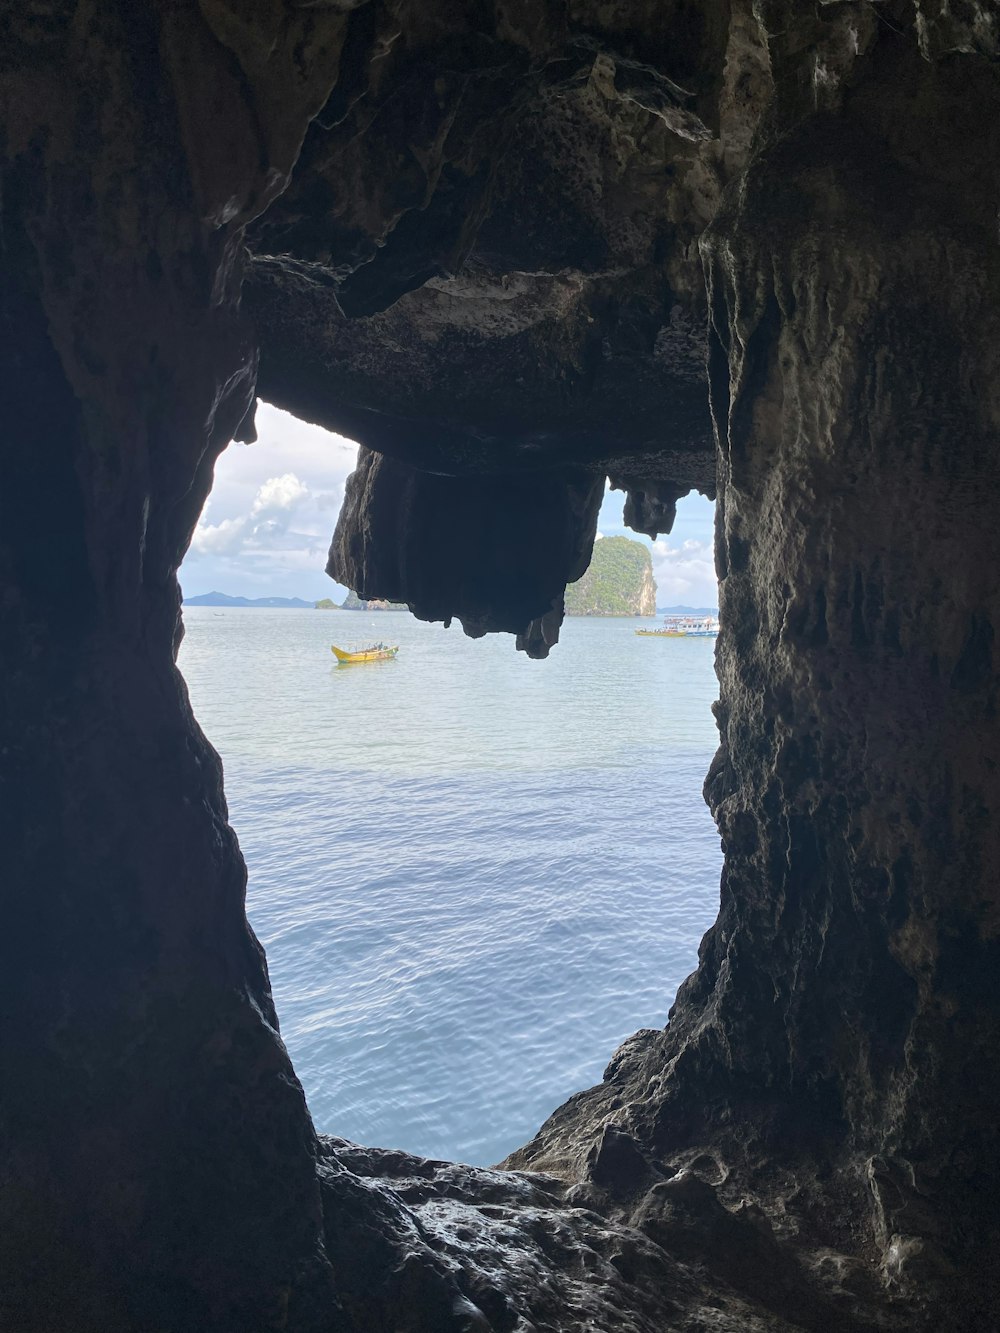 a view of the ocean through a cave